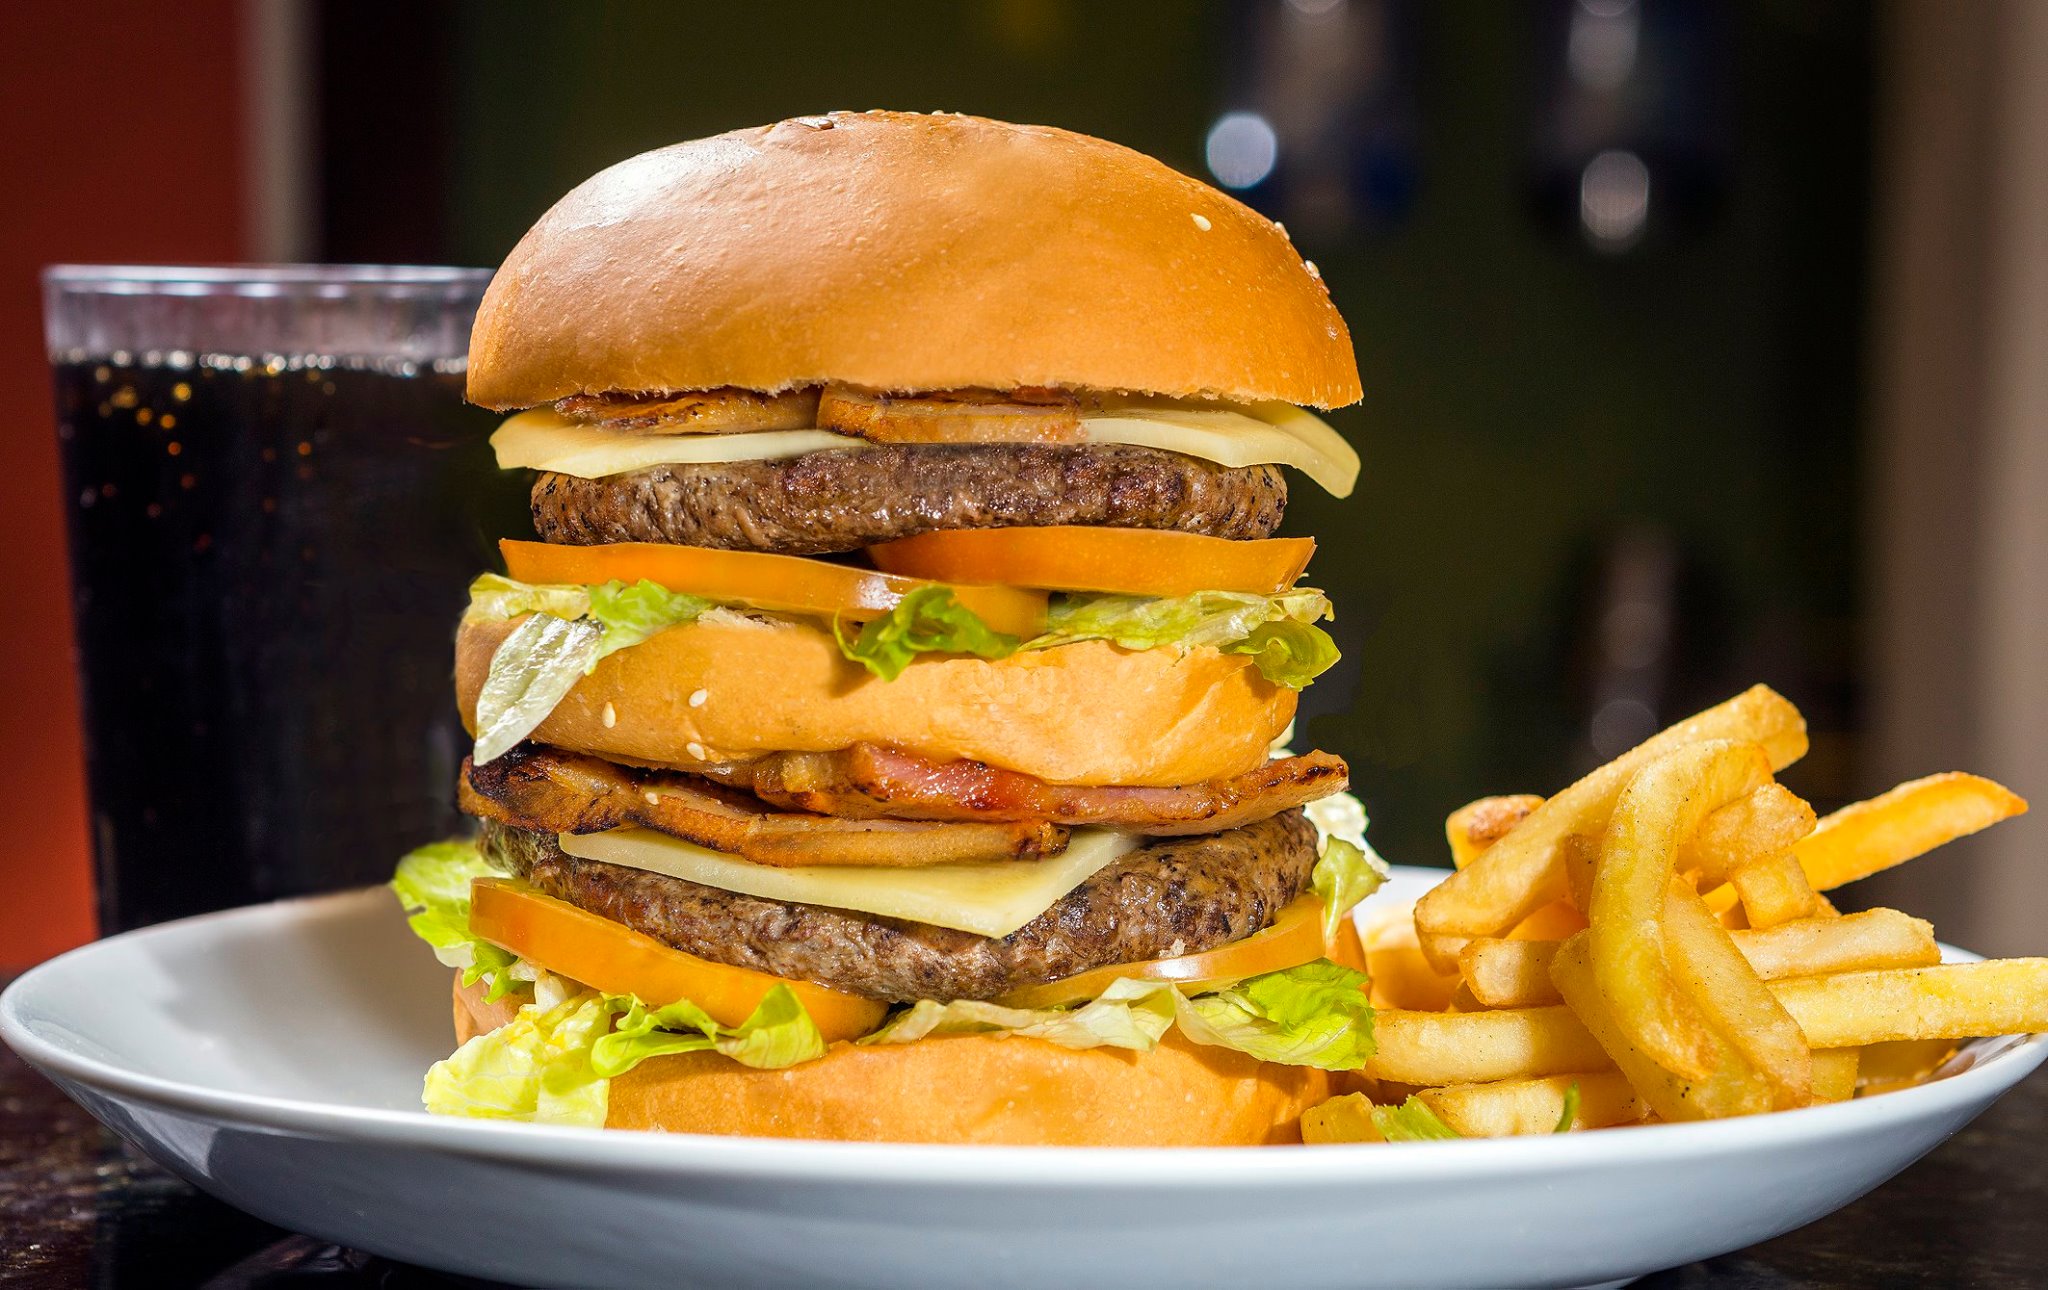 Restaurantes: 15 lugares para comer hambúrgueres caprichados no Rio de Janeiro